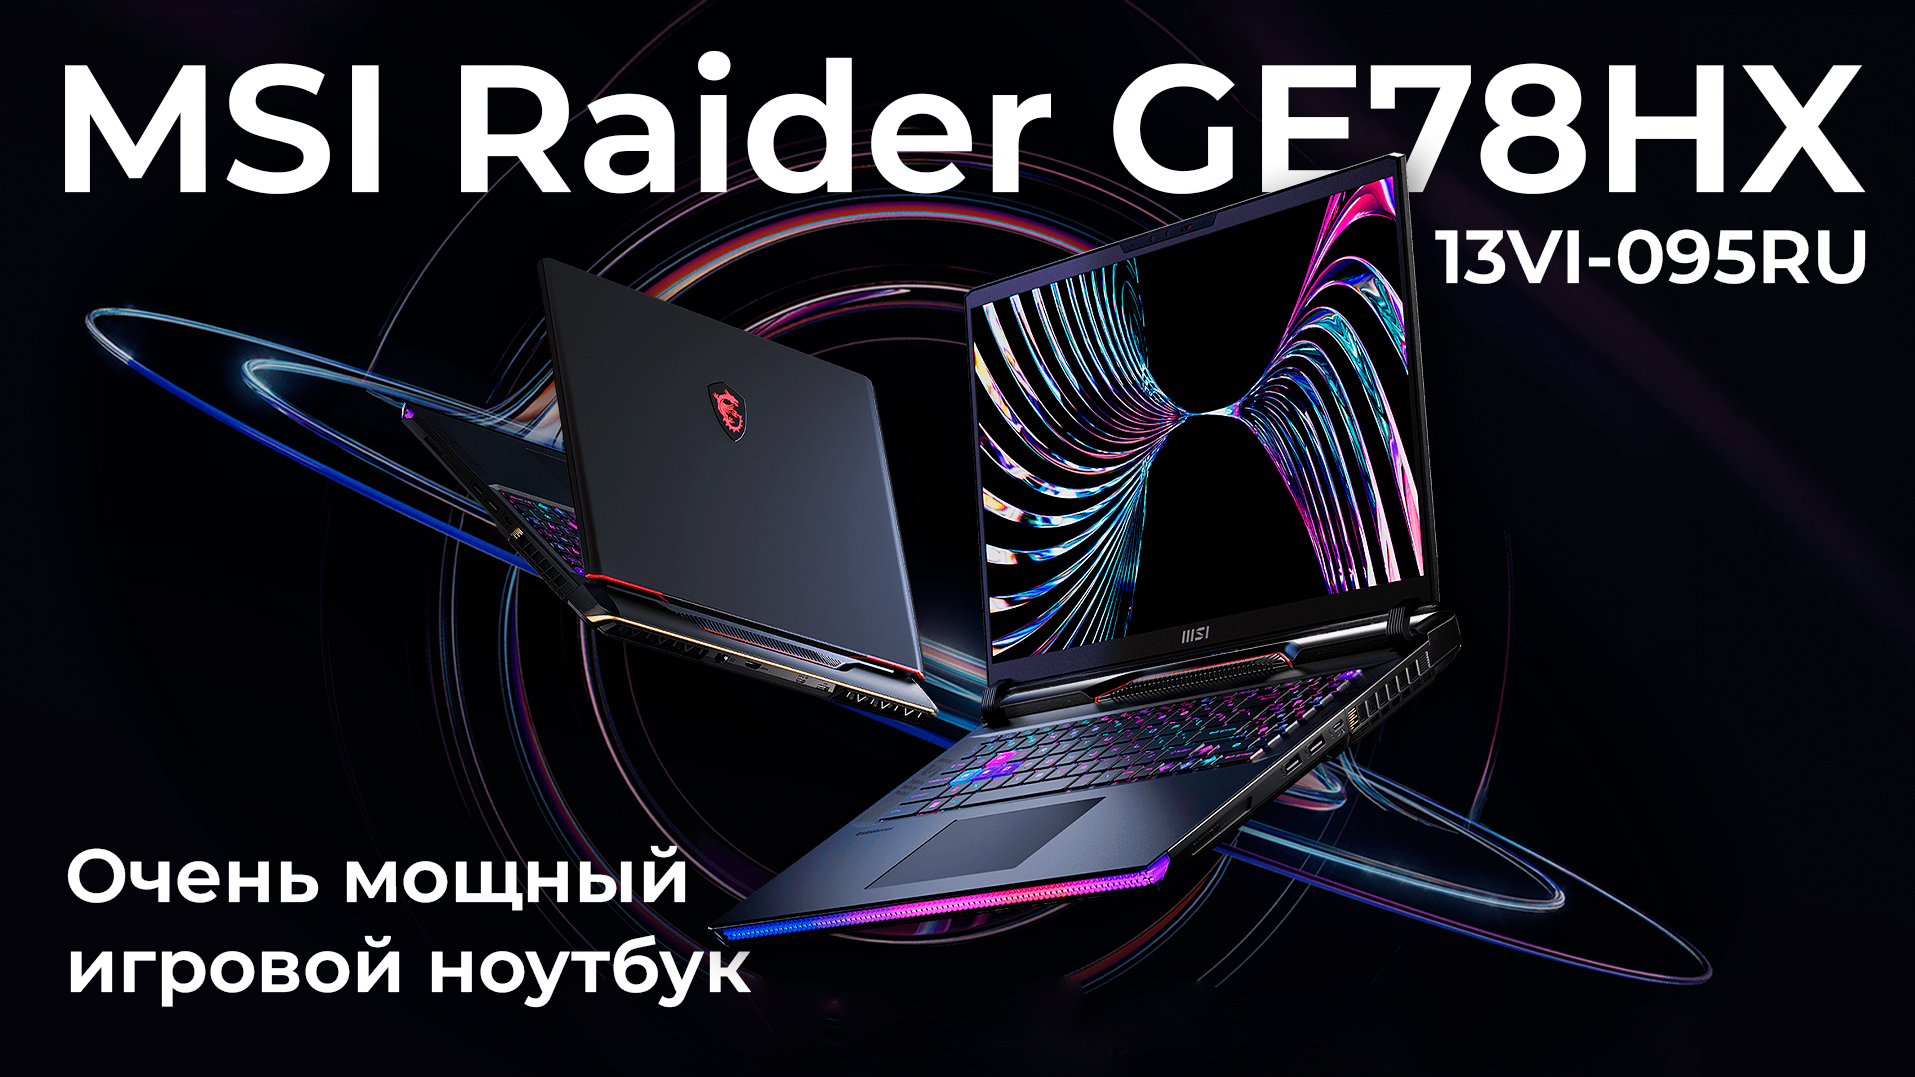 Обзор ноутбука MSI Raider GE78HX 13VI-095RU